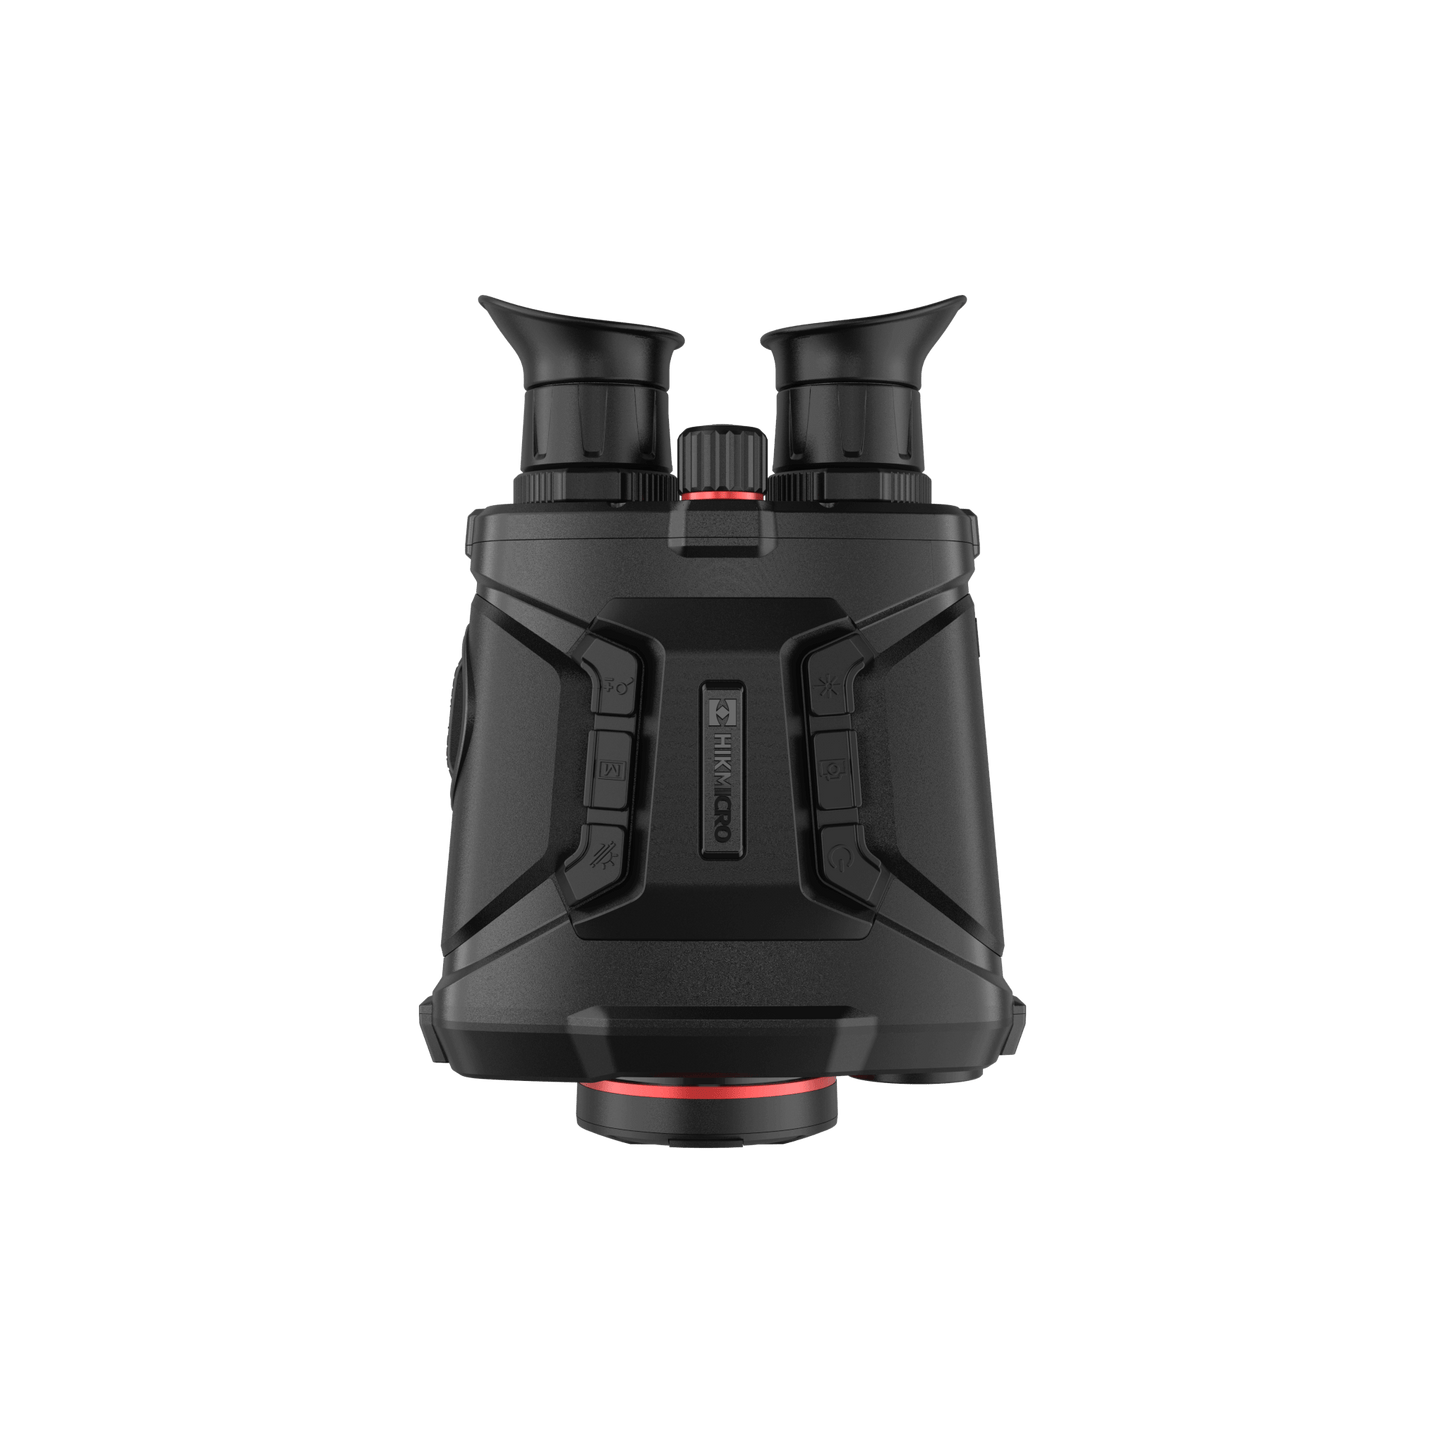 HikMicro Raptor RH50 handheld thermal binocular with infrared and optical capabilities - Top view